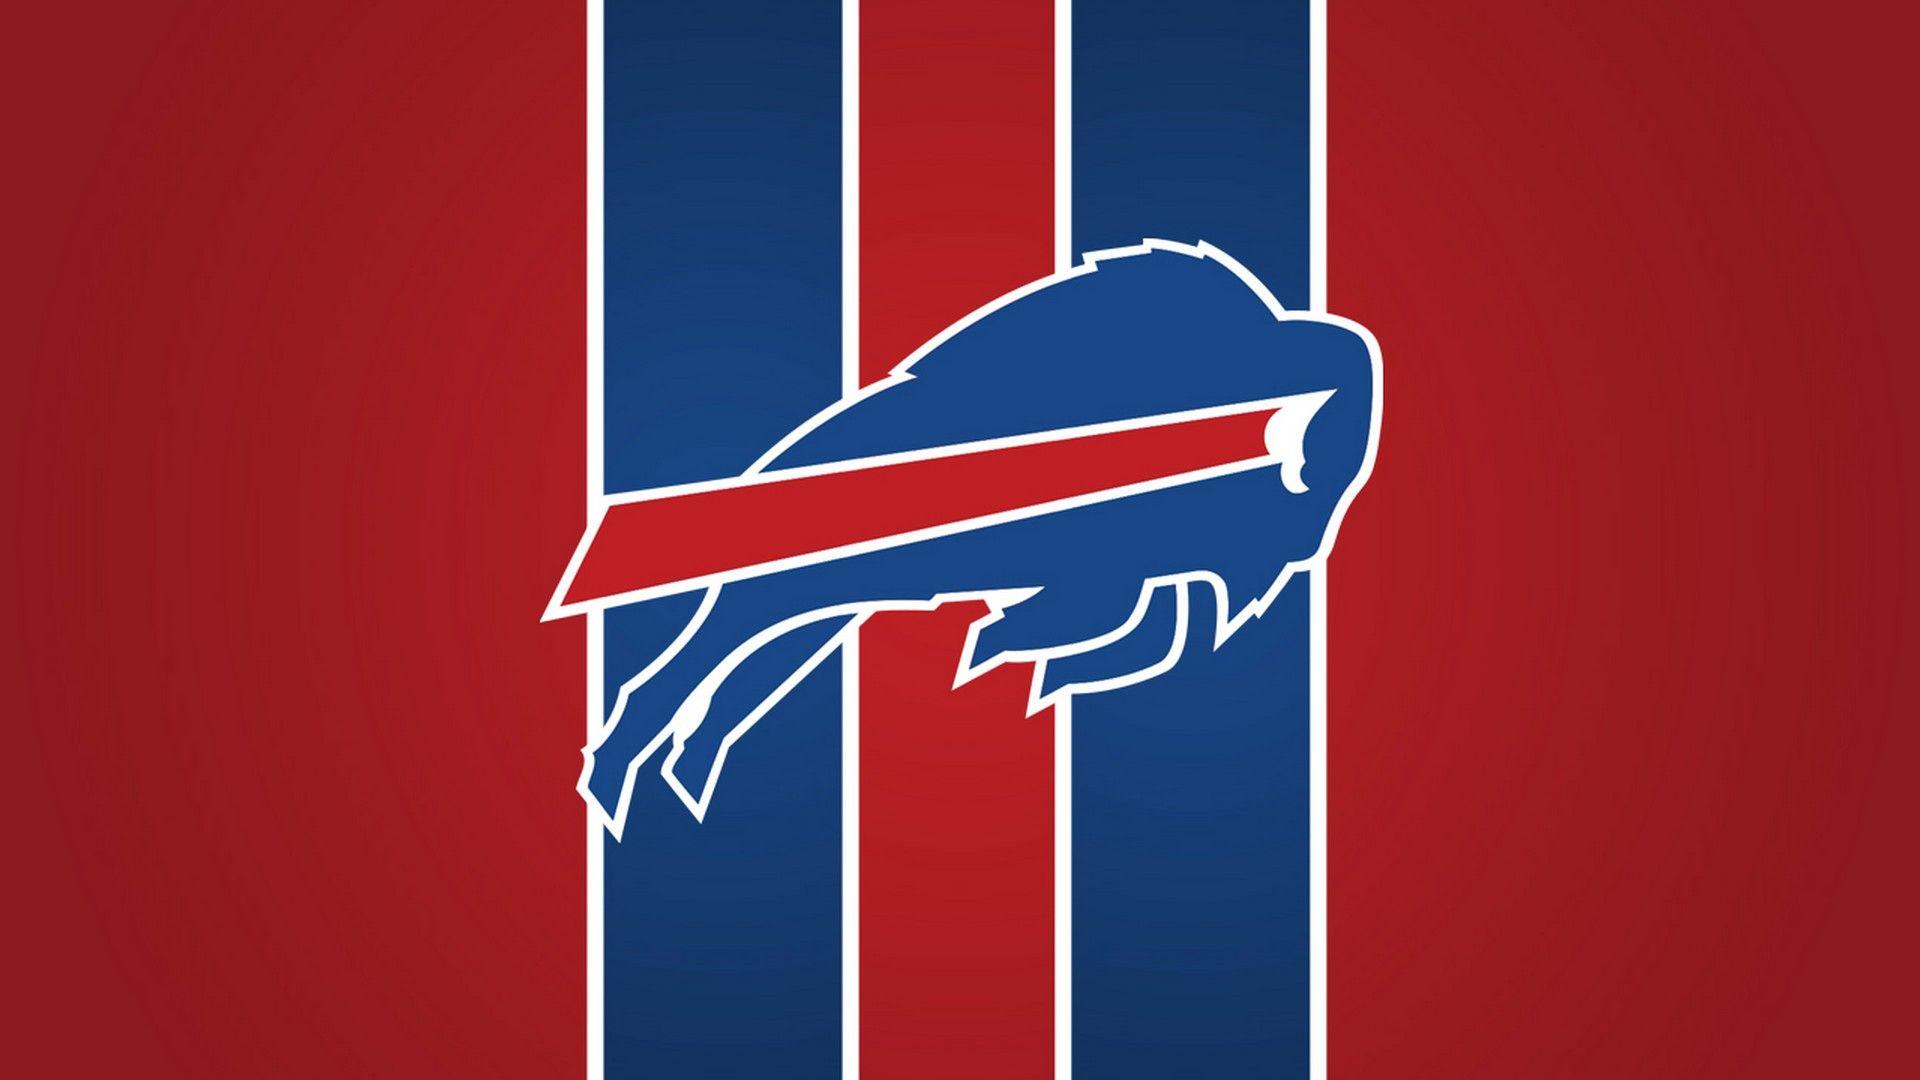 NFL Wallpaper. Buffalo bills logo, Buffalo bills, Buffalo bills football